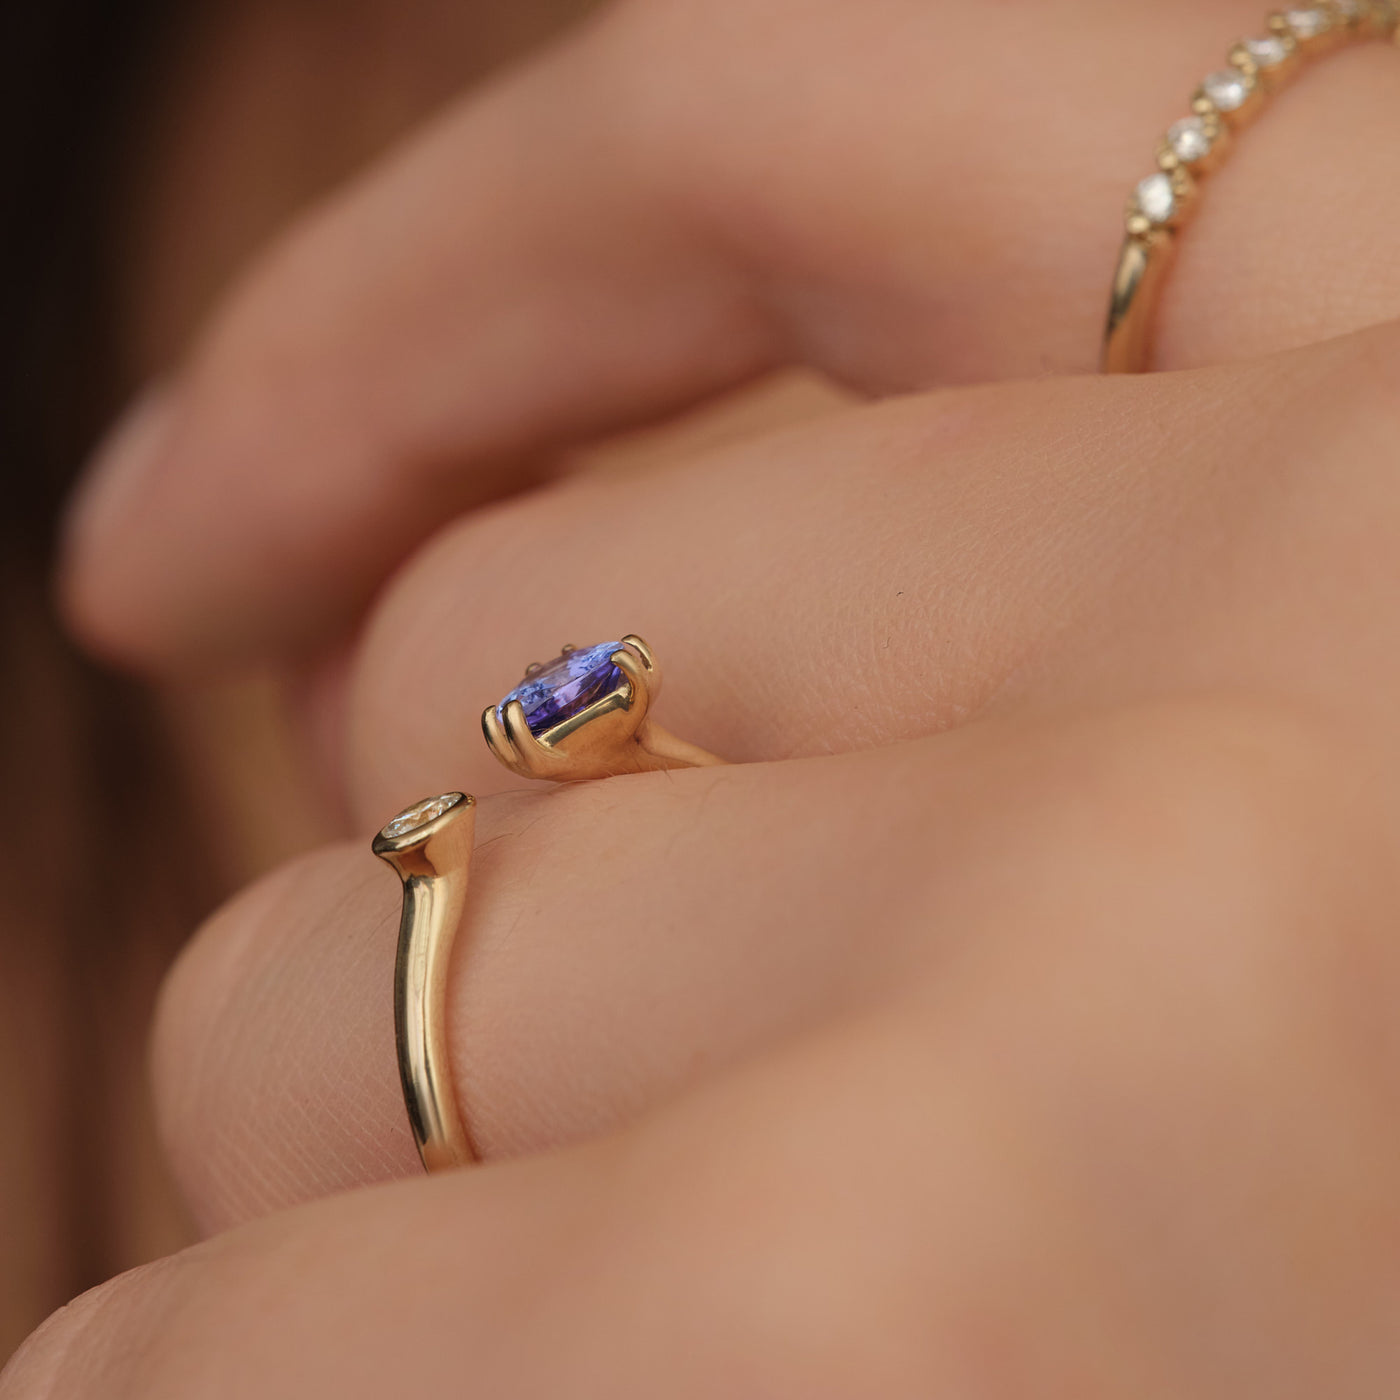 Gwen Open Cuff Tanzanite Diamond Ring